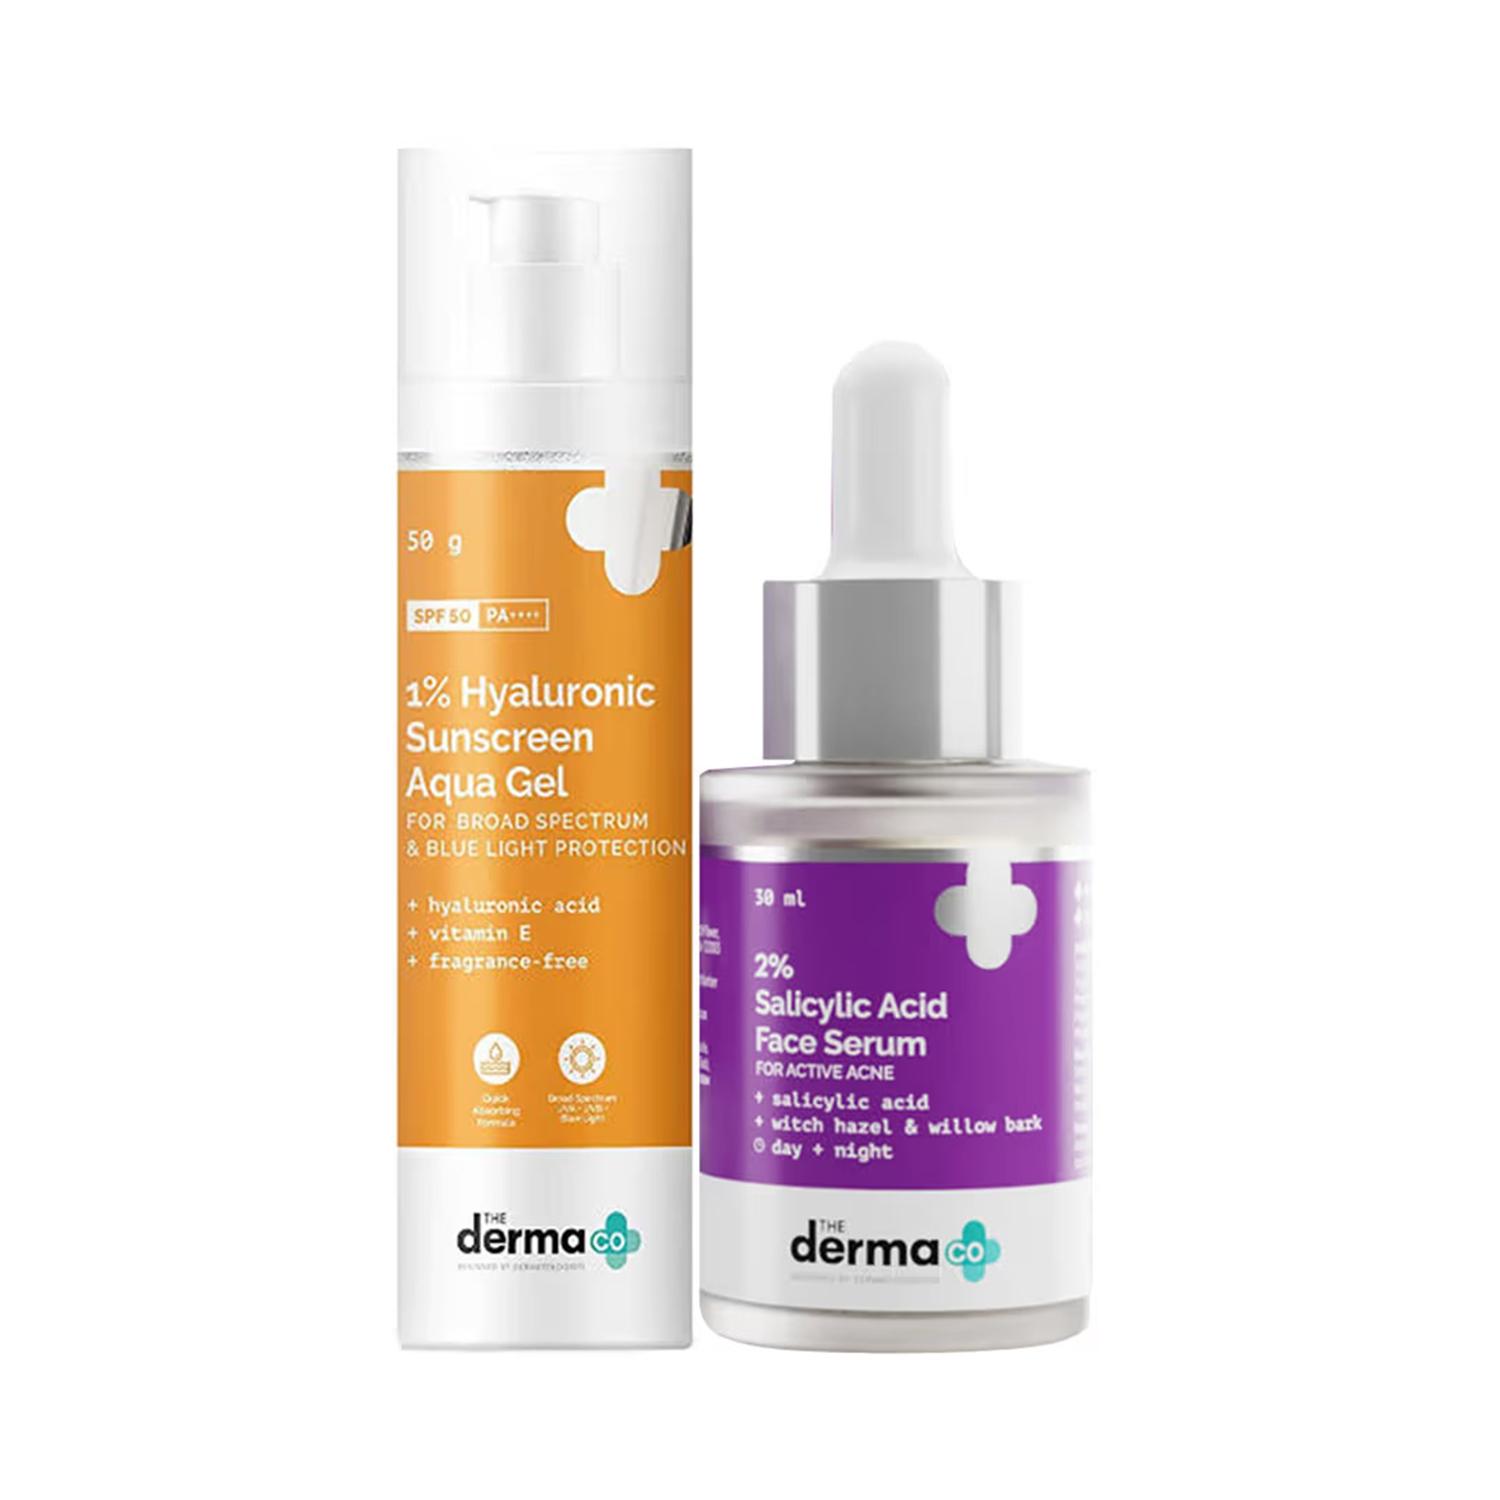 The Derma Co 1% Hyaluronic Sunscreen and 2% Salicylic Serum Combo